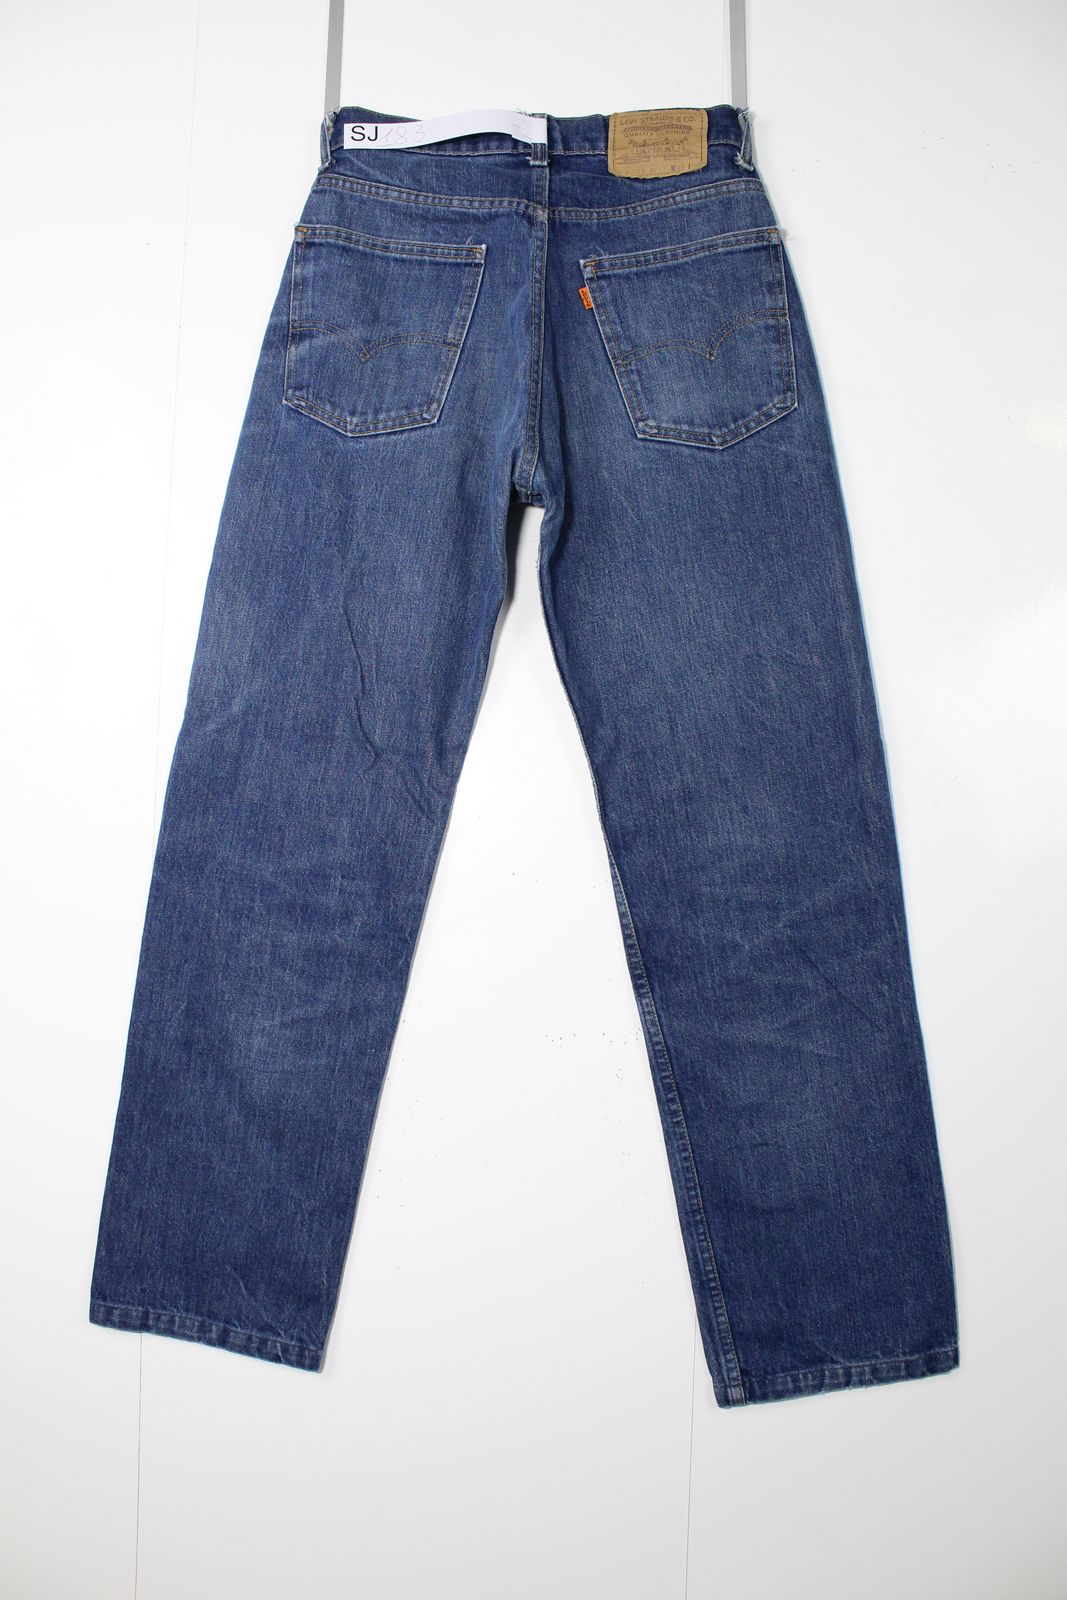 Levi's 505 Orange Tab Denim W32 L36 Made In USA Jeans Vintage